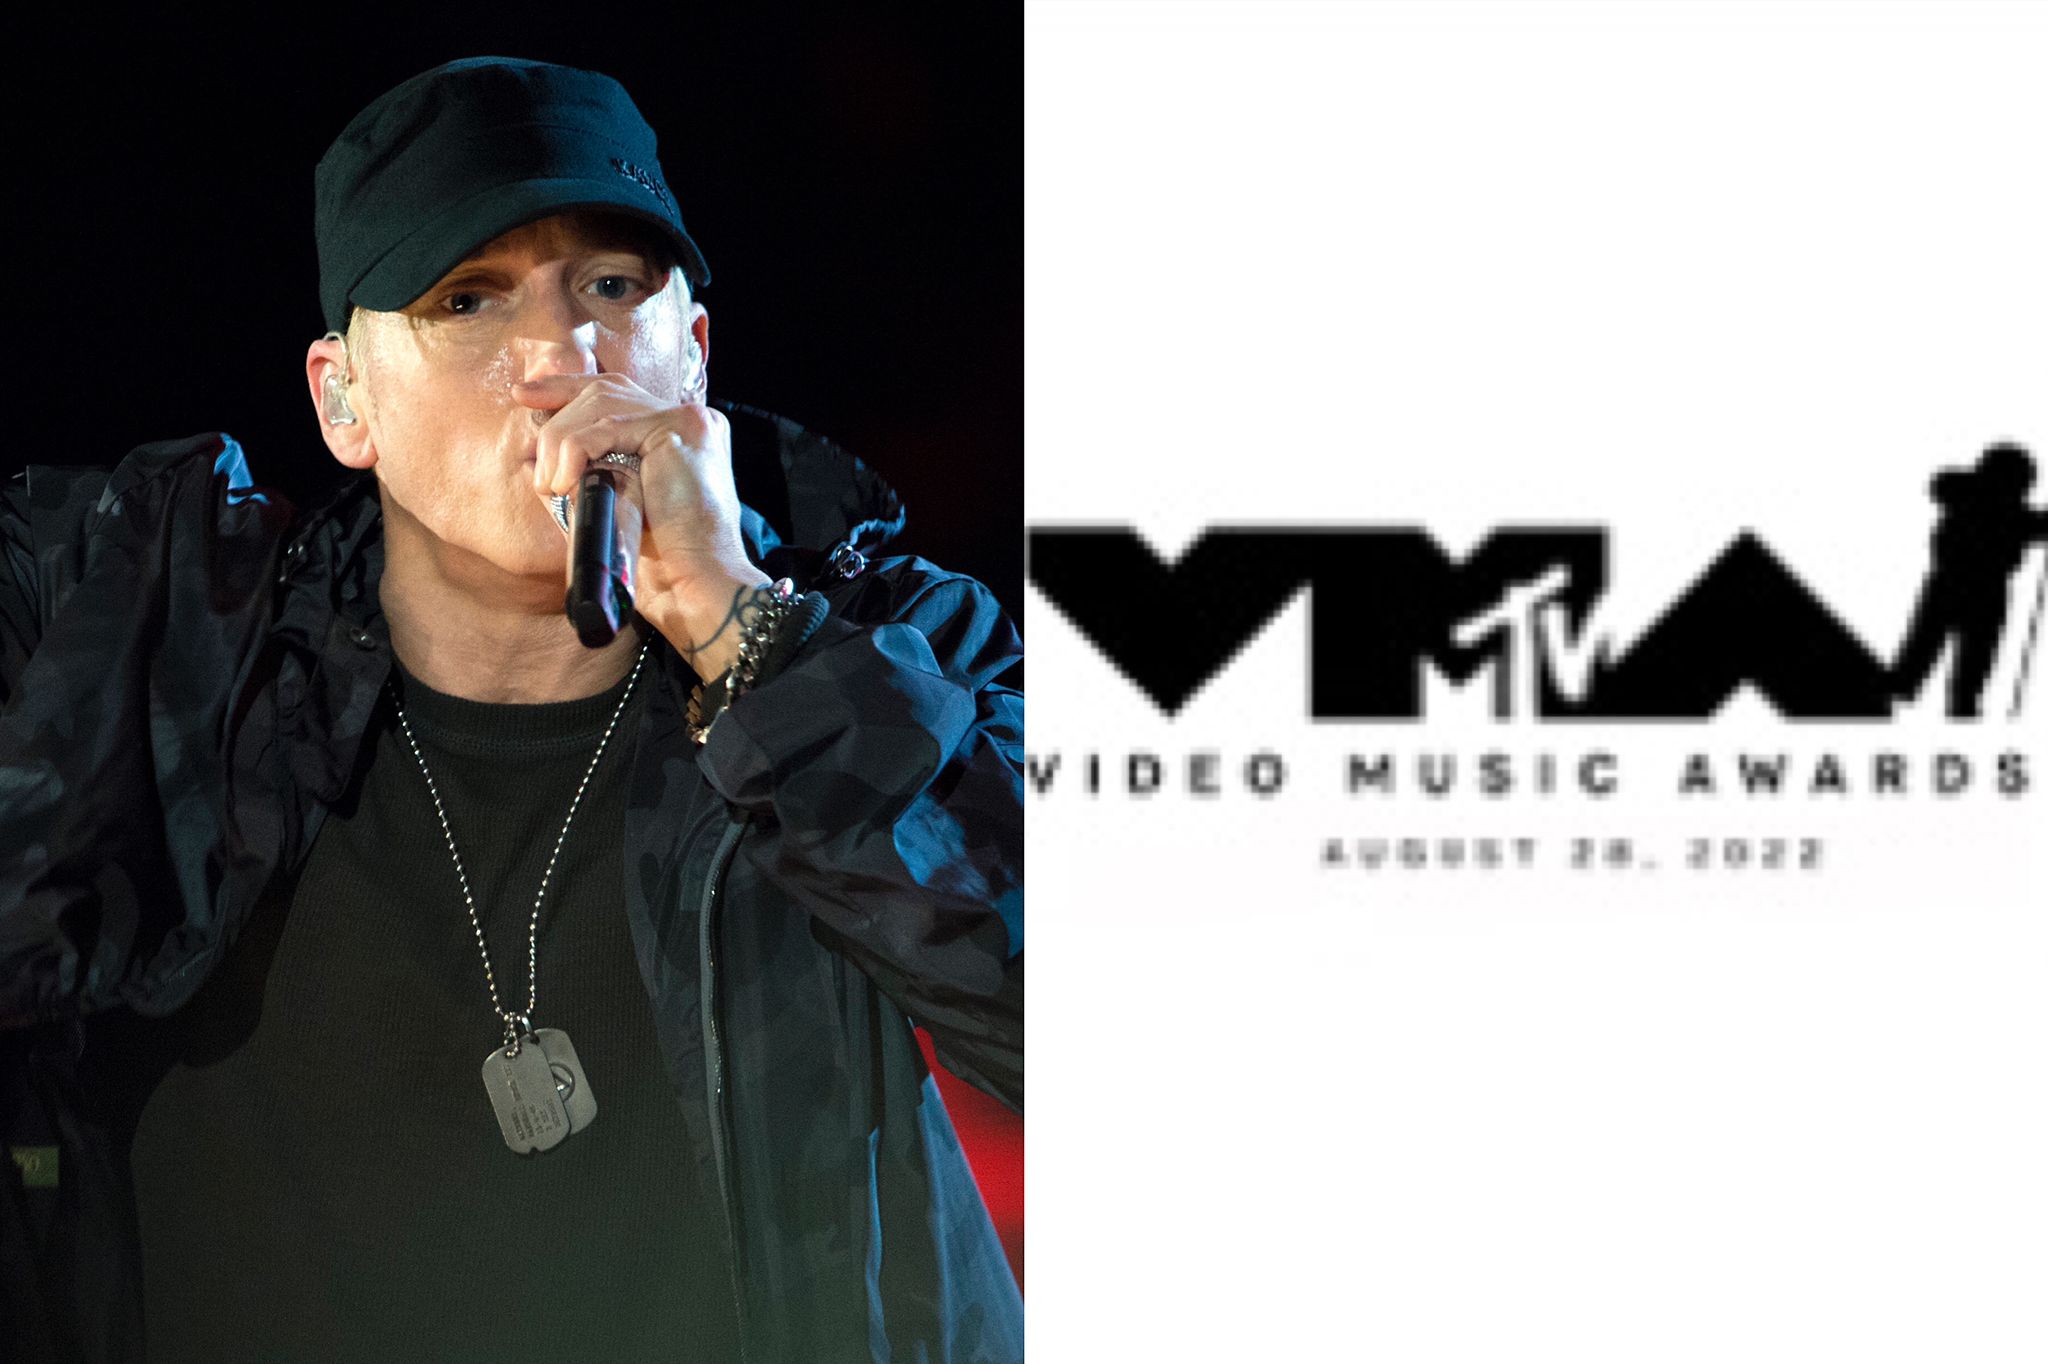 MTV Video Music Awards, tra i performer anche Eminem: i dettagli